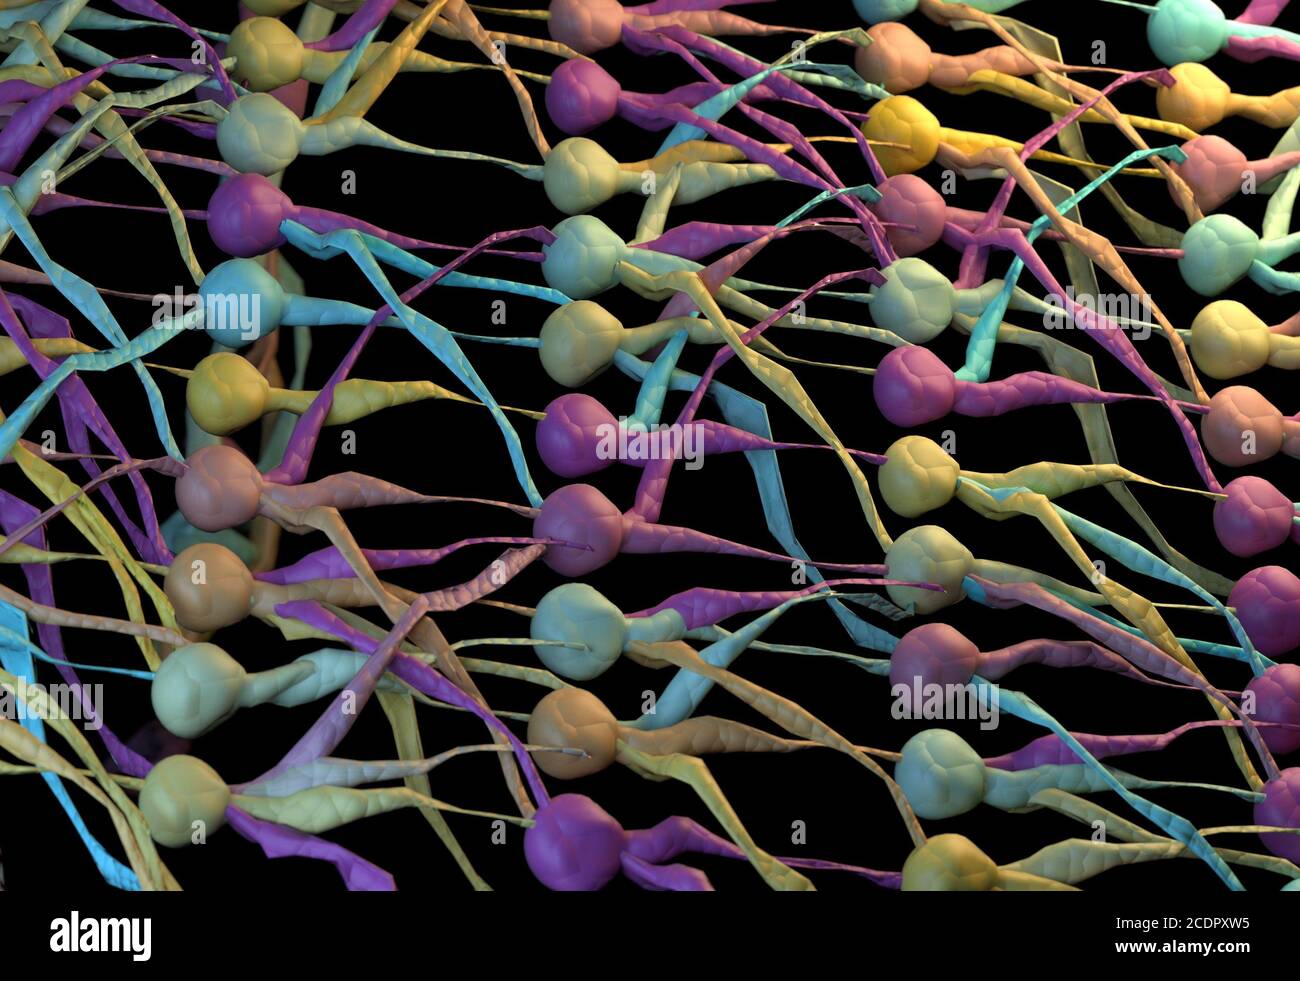 Color neuronal network. neuron net. 3D Illustration. Stock Photo